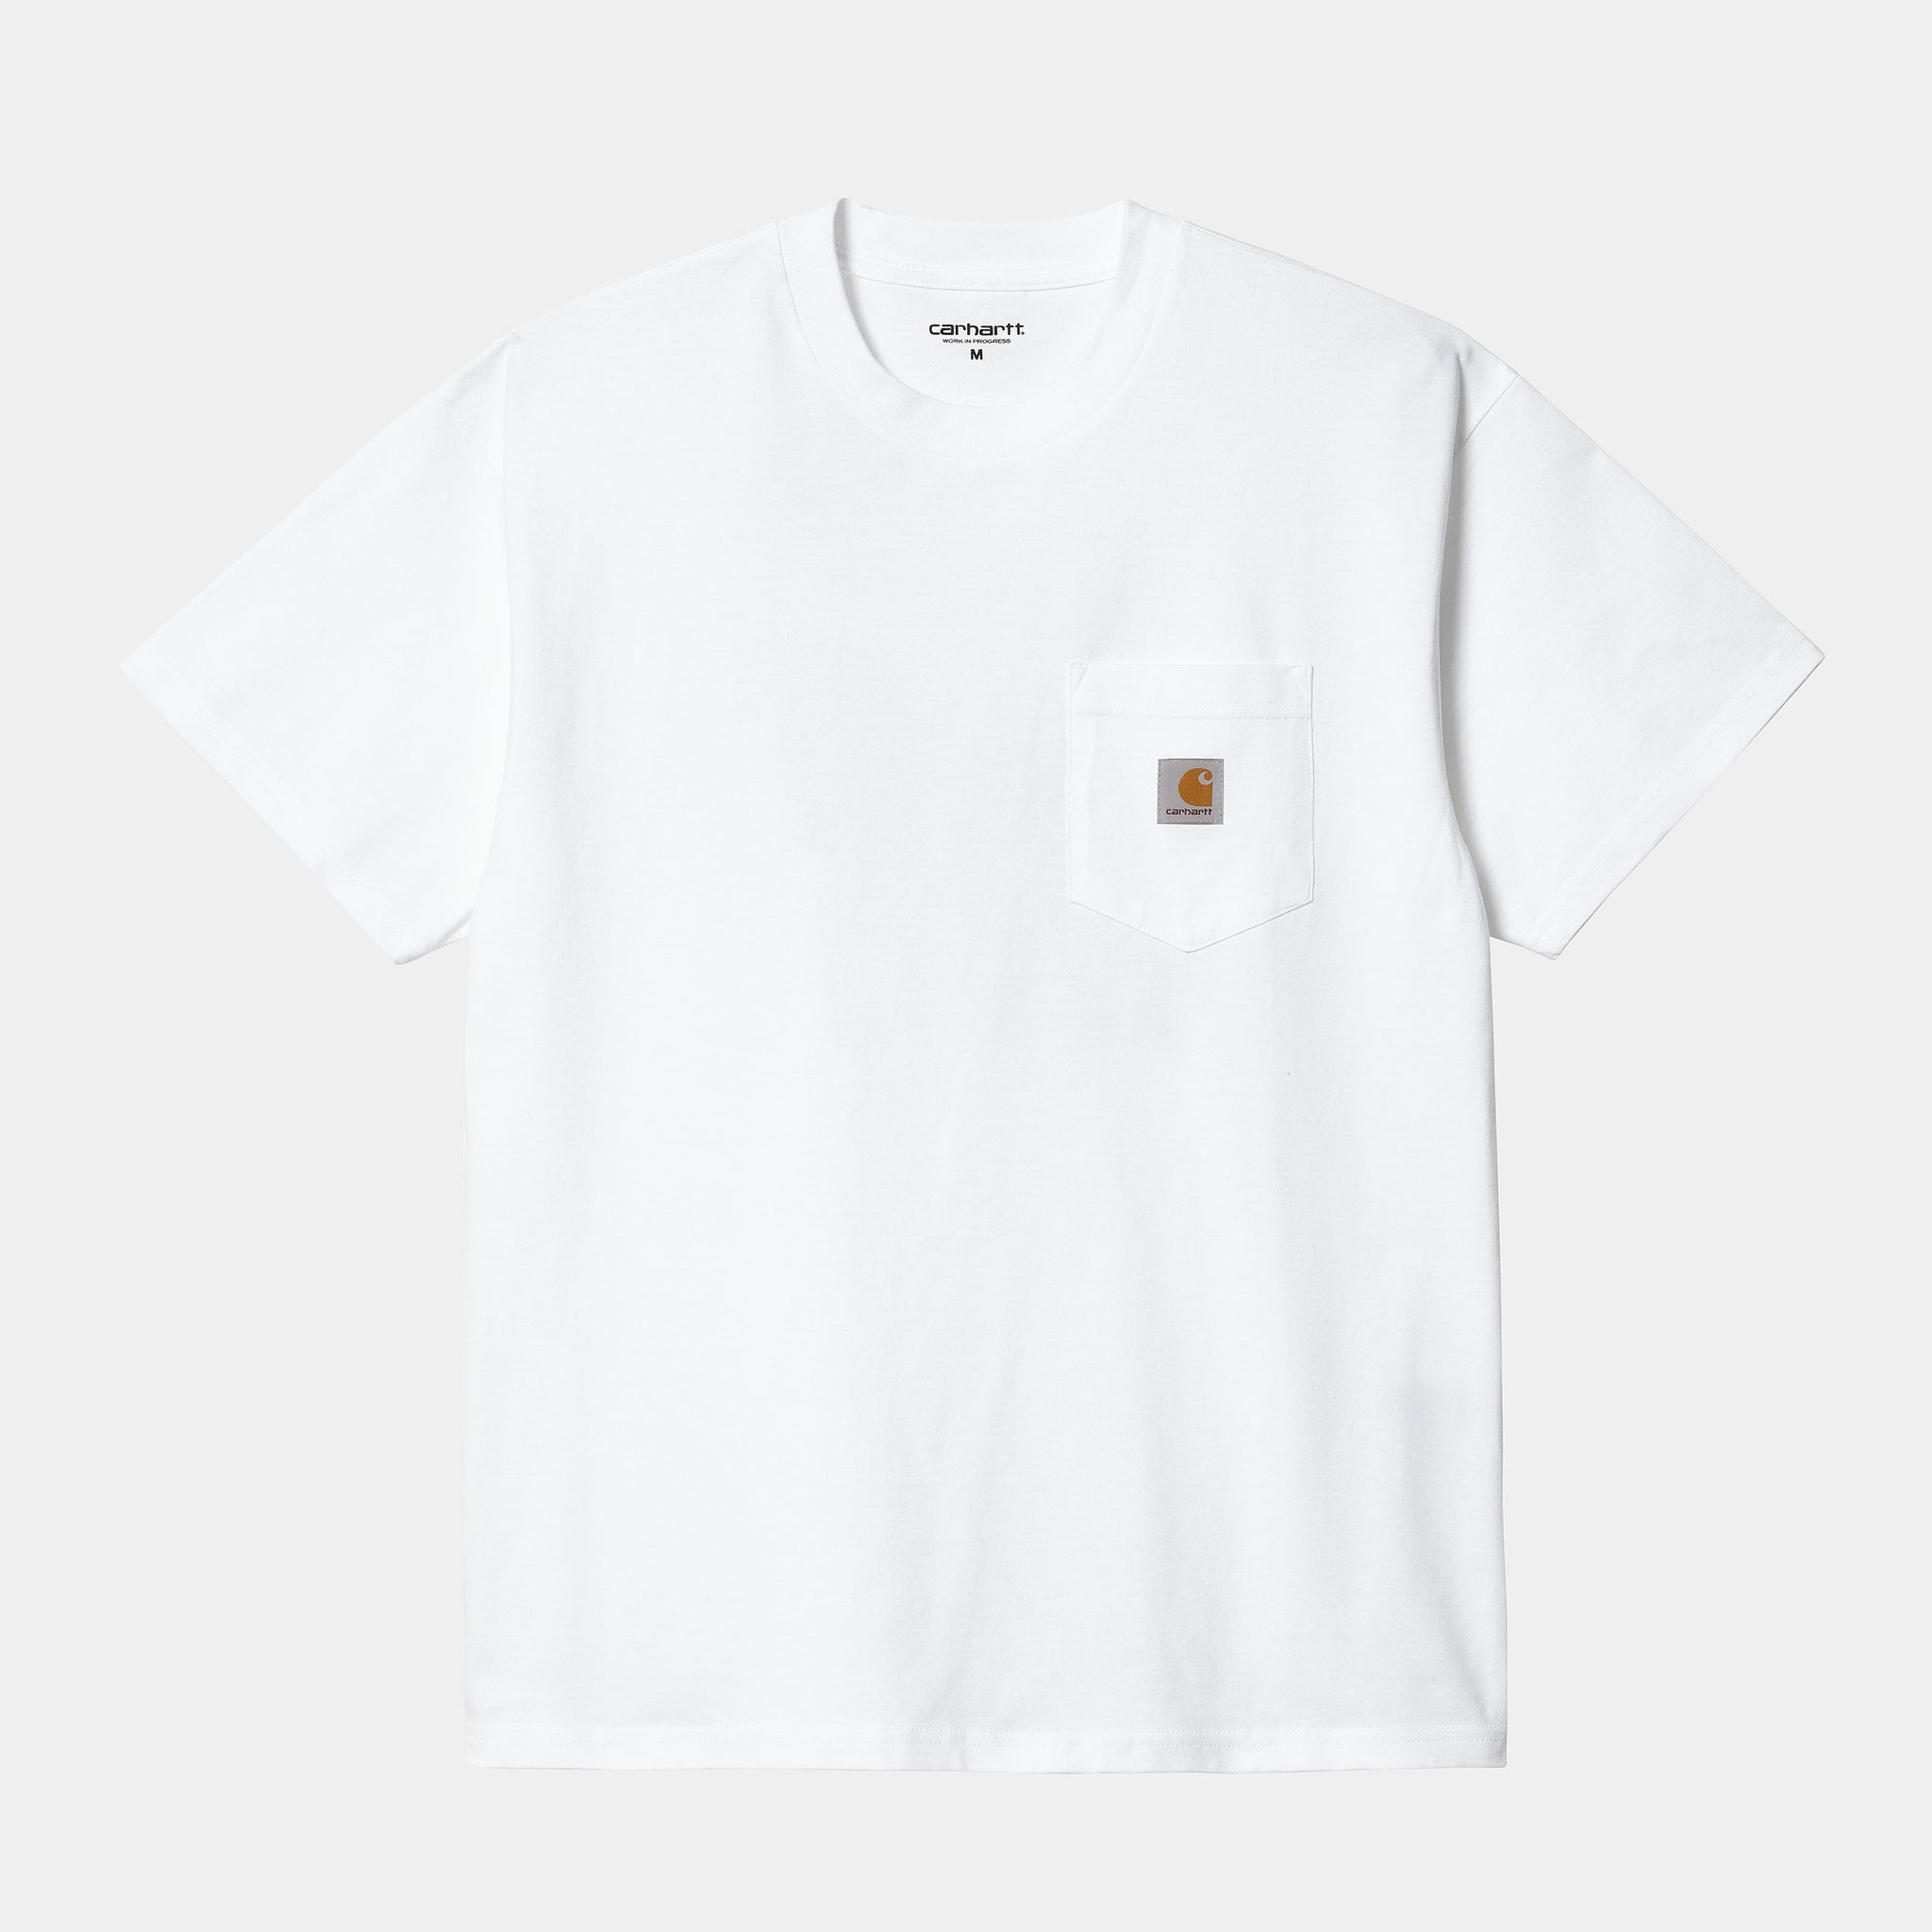 S/S Tamas Pocket T-Shirt Organic Cotton Single Jersey, 175 g/m² (White)